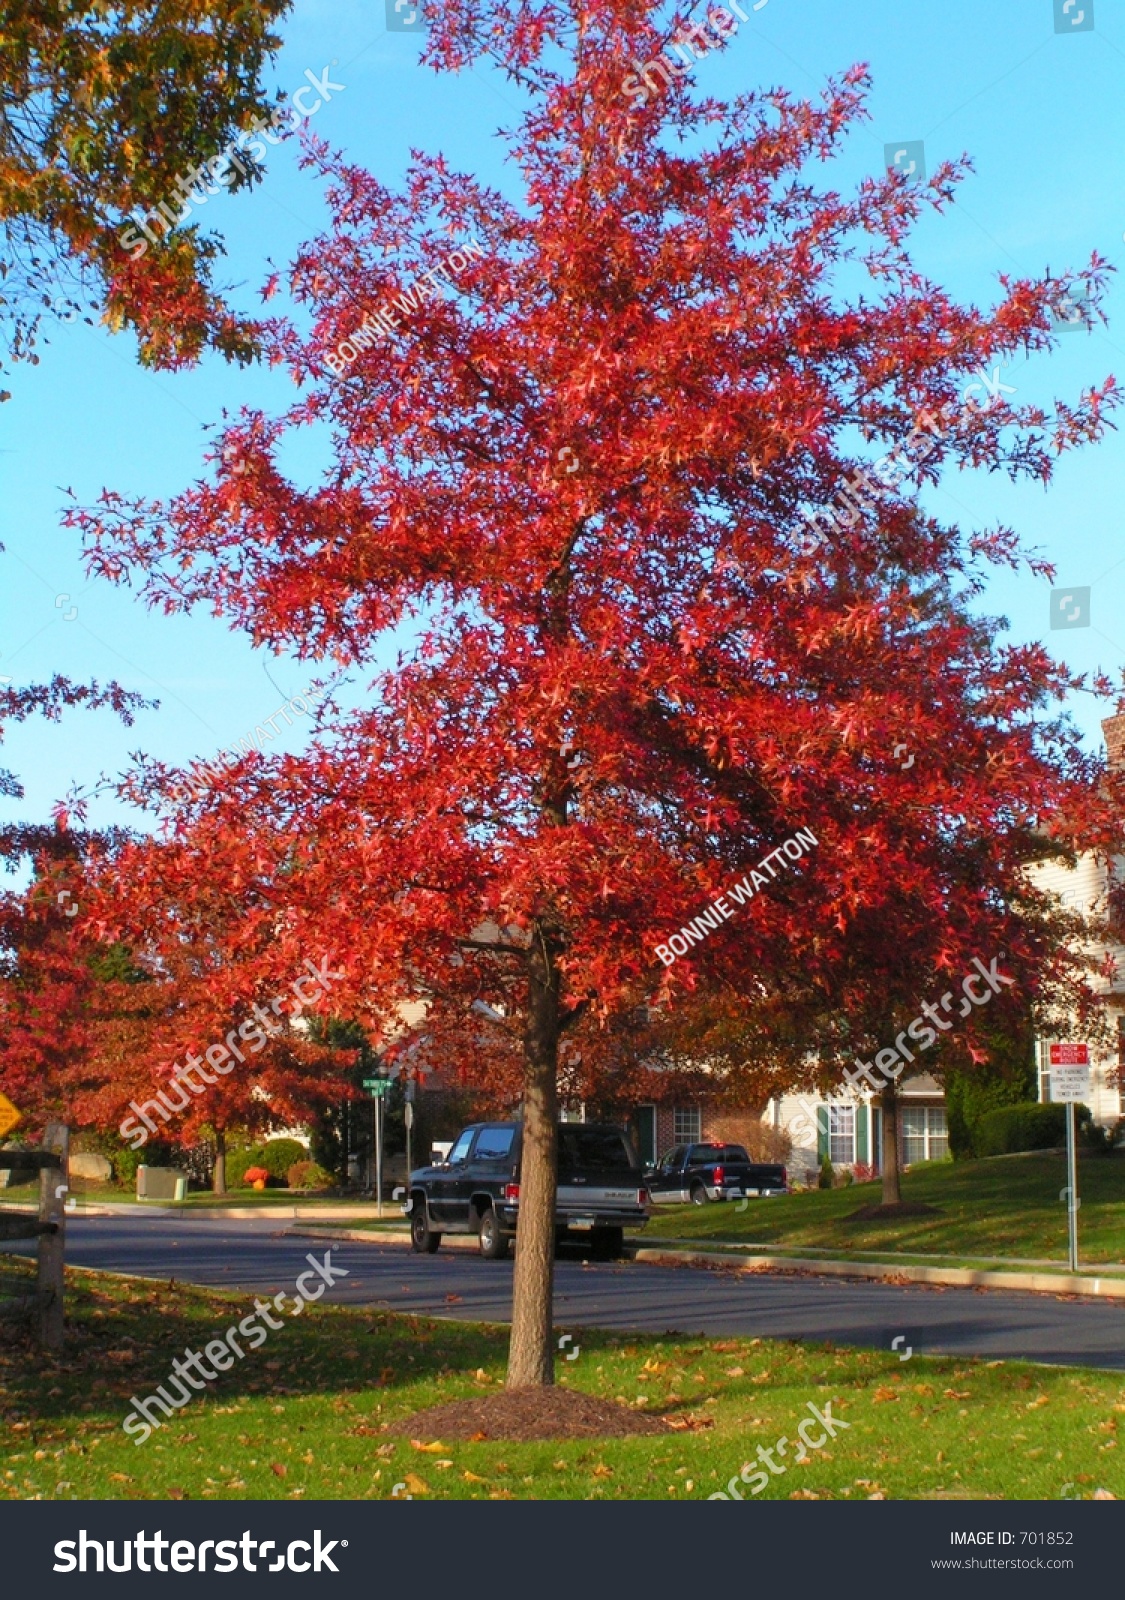 Pin Oak Tree With Red Fall Foliage Stock Photo 701852 : Shutterstock